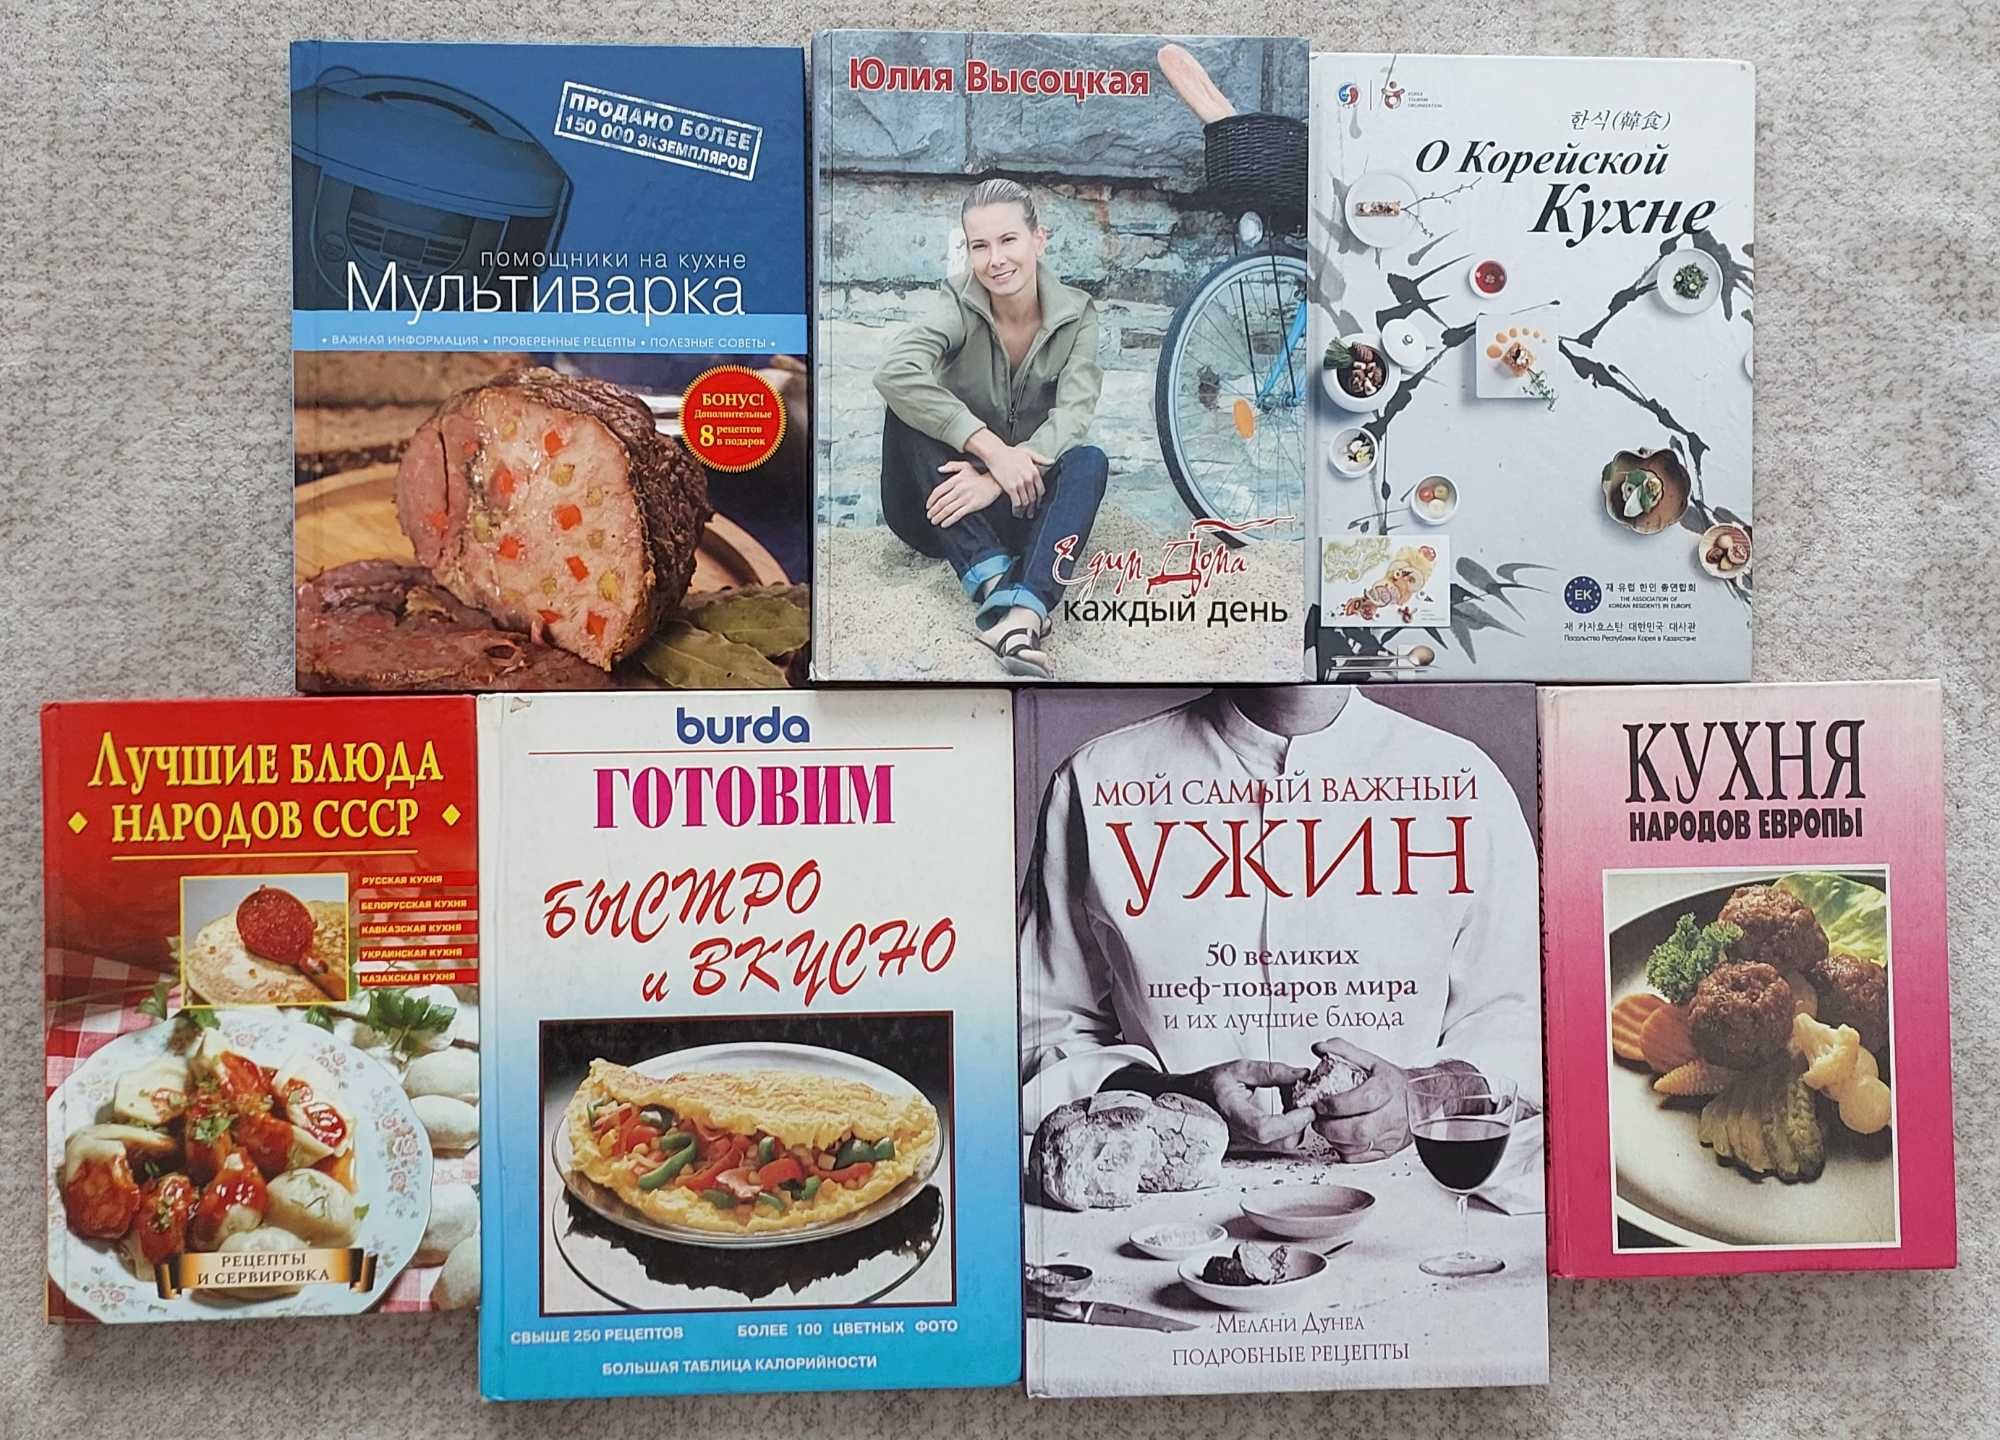 Книги о гостеприимстве,кулинарии,диета,рецепты,похудению и др